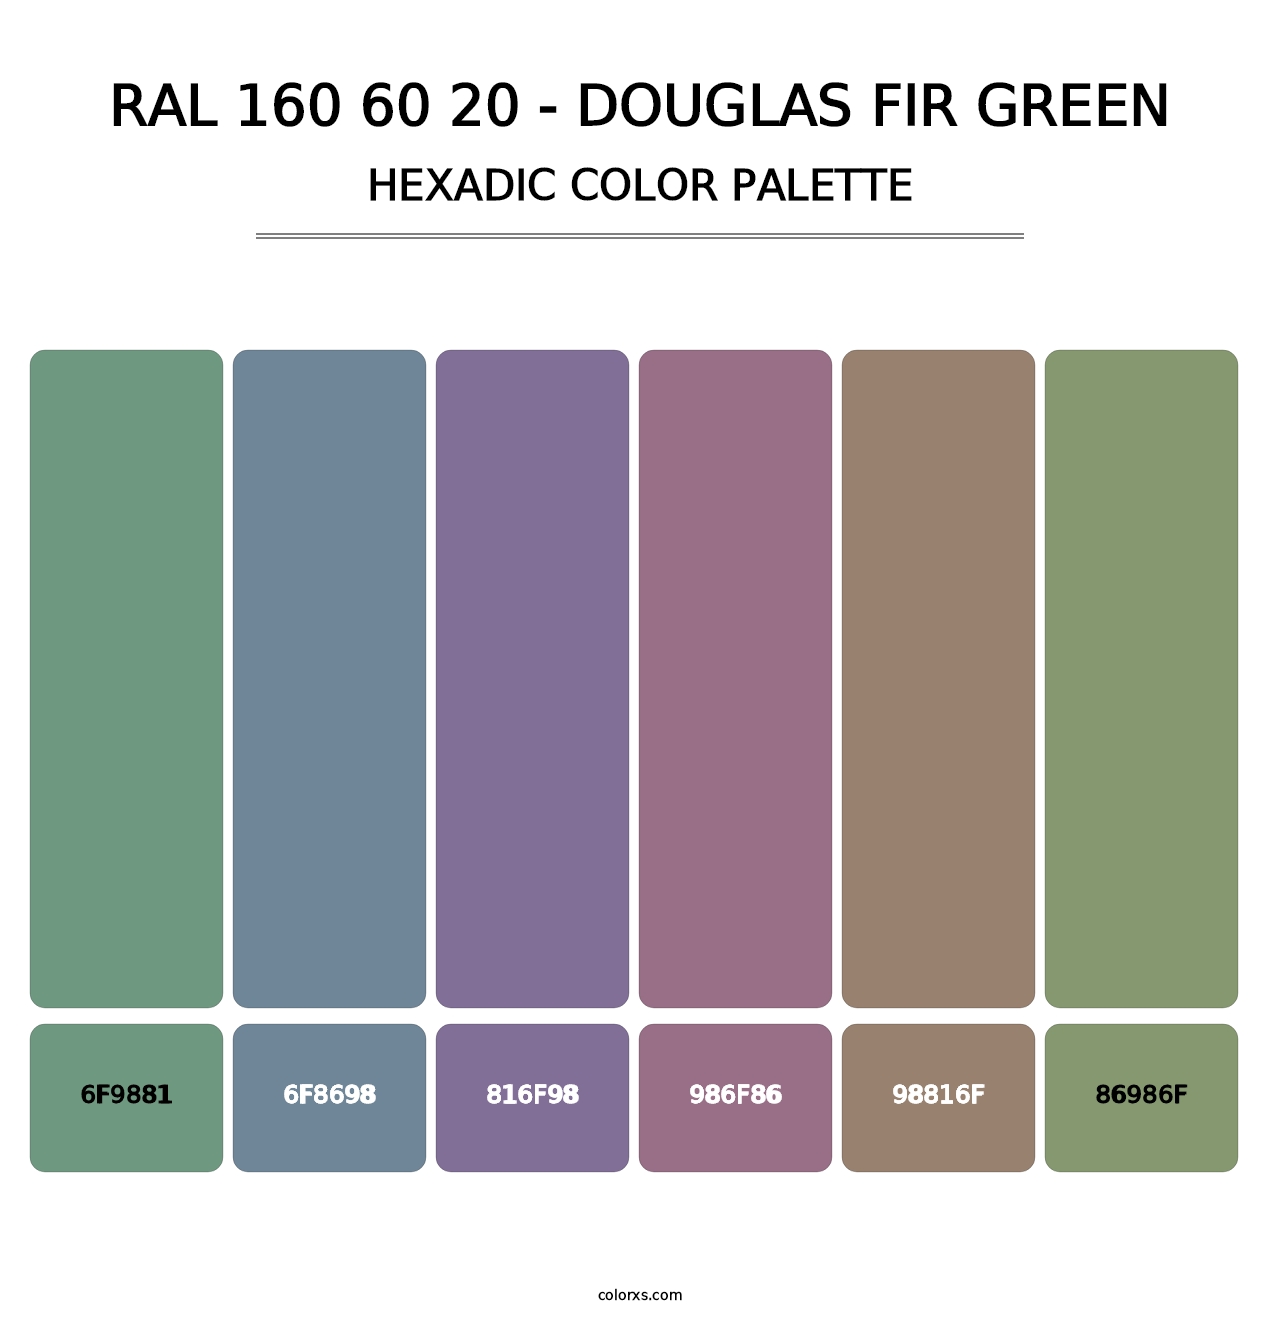 RAL 160 60 20 - Douglas Fir Green - Hexadic Color Palette